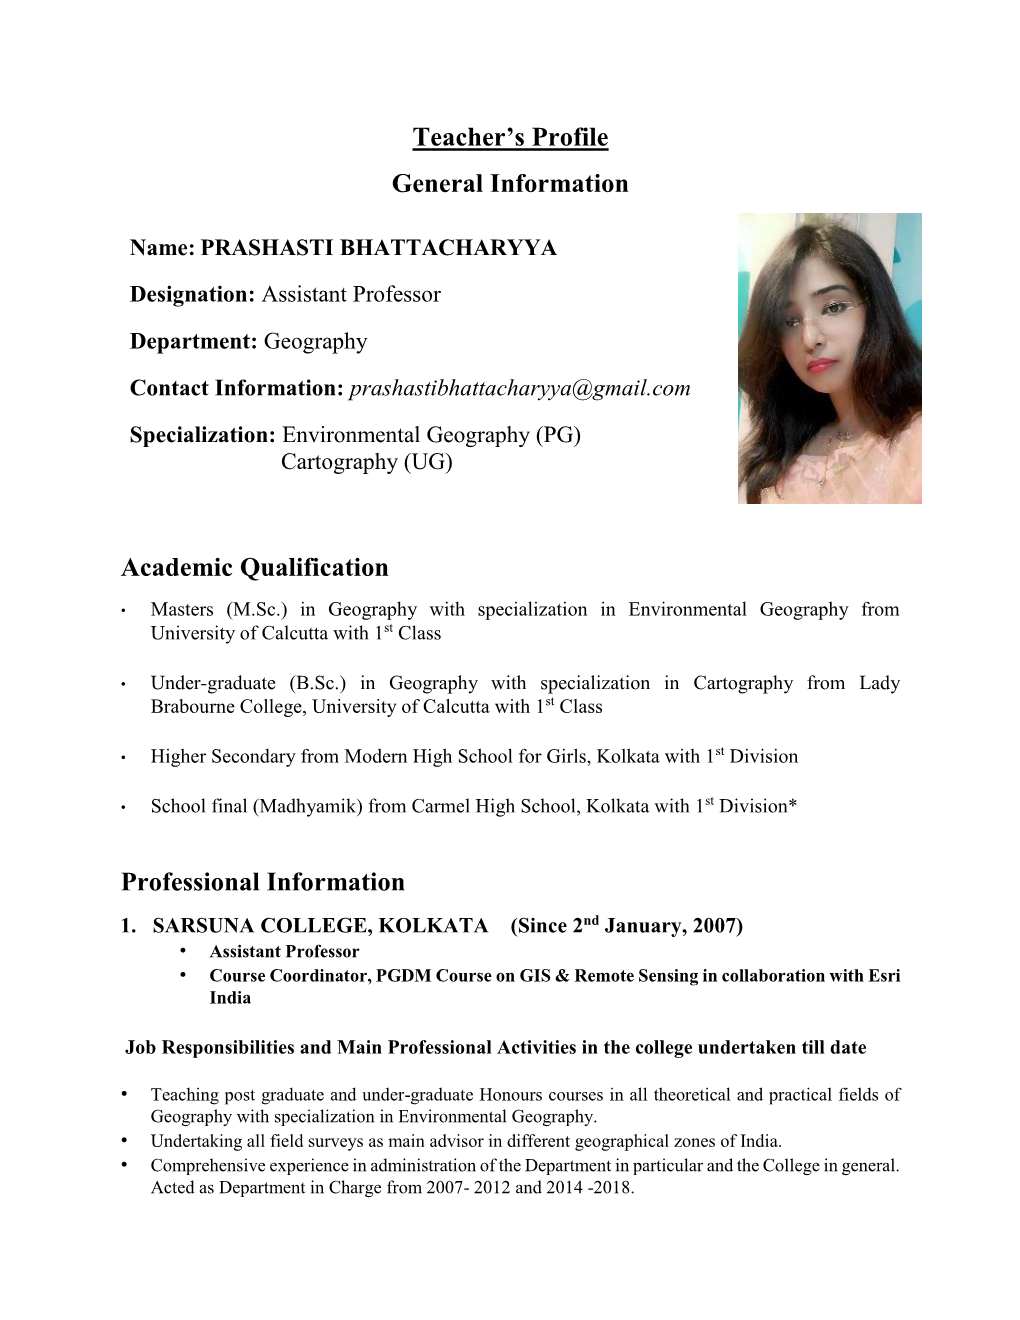 Teacher's Profile General Information Academic Qualification Professional Information